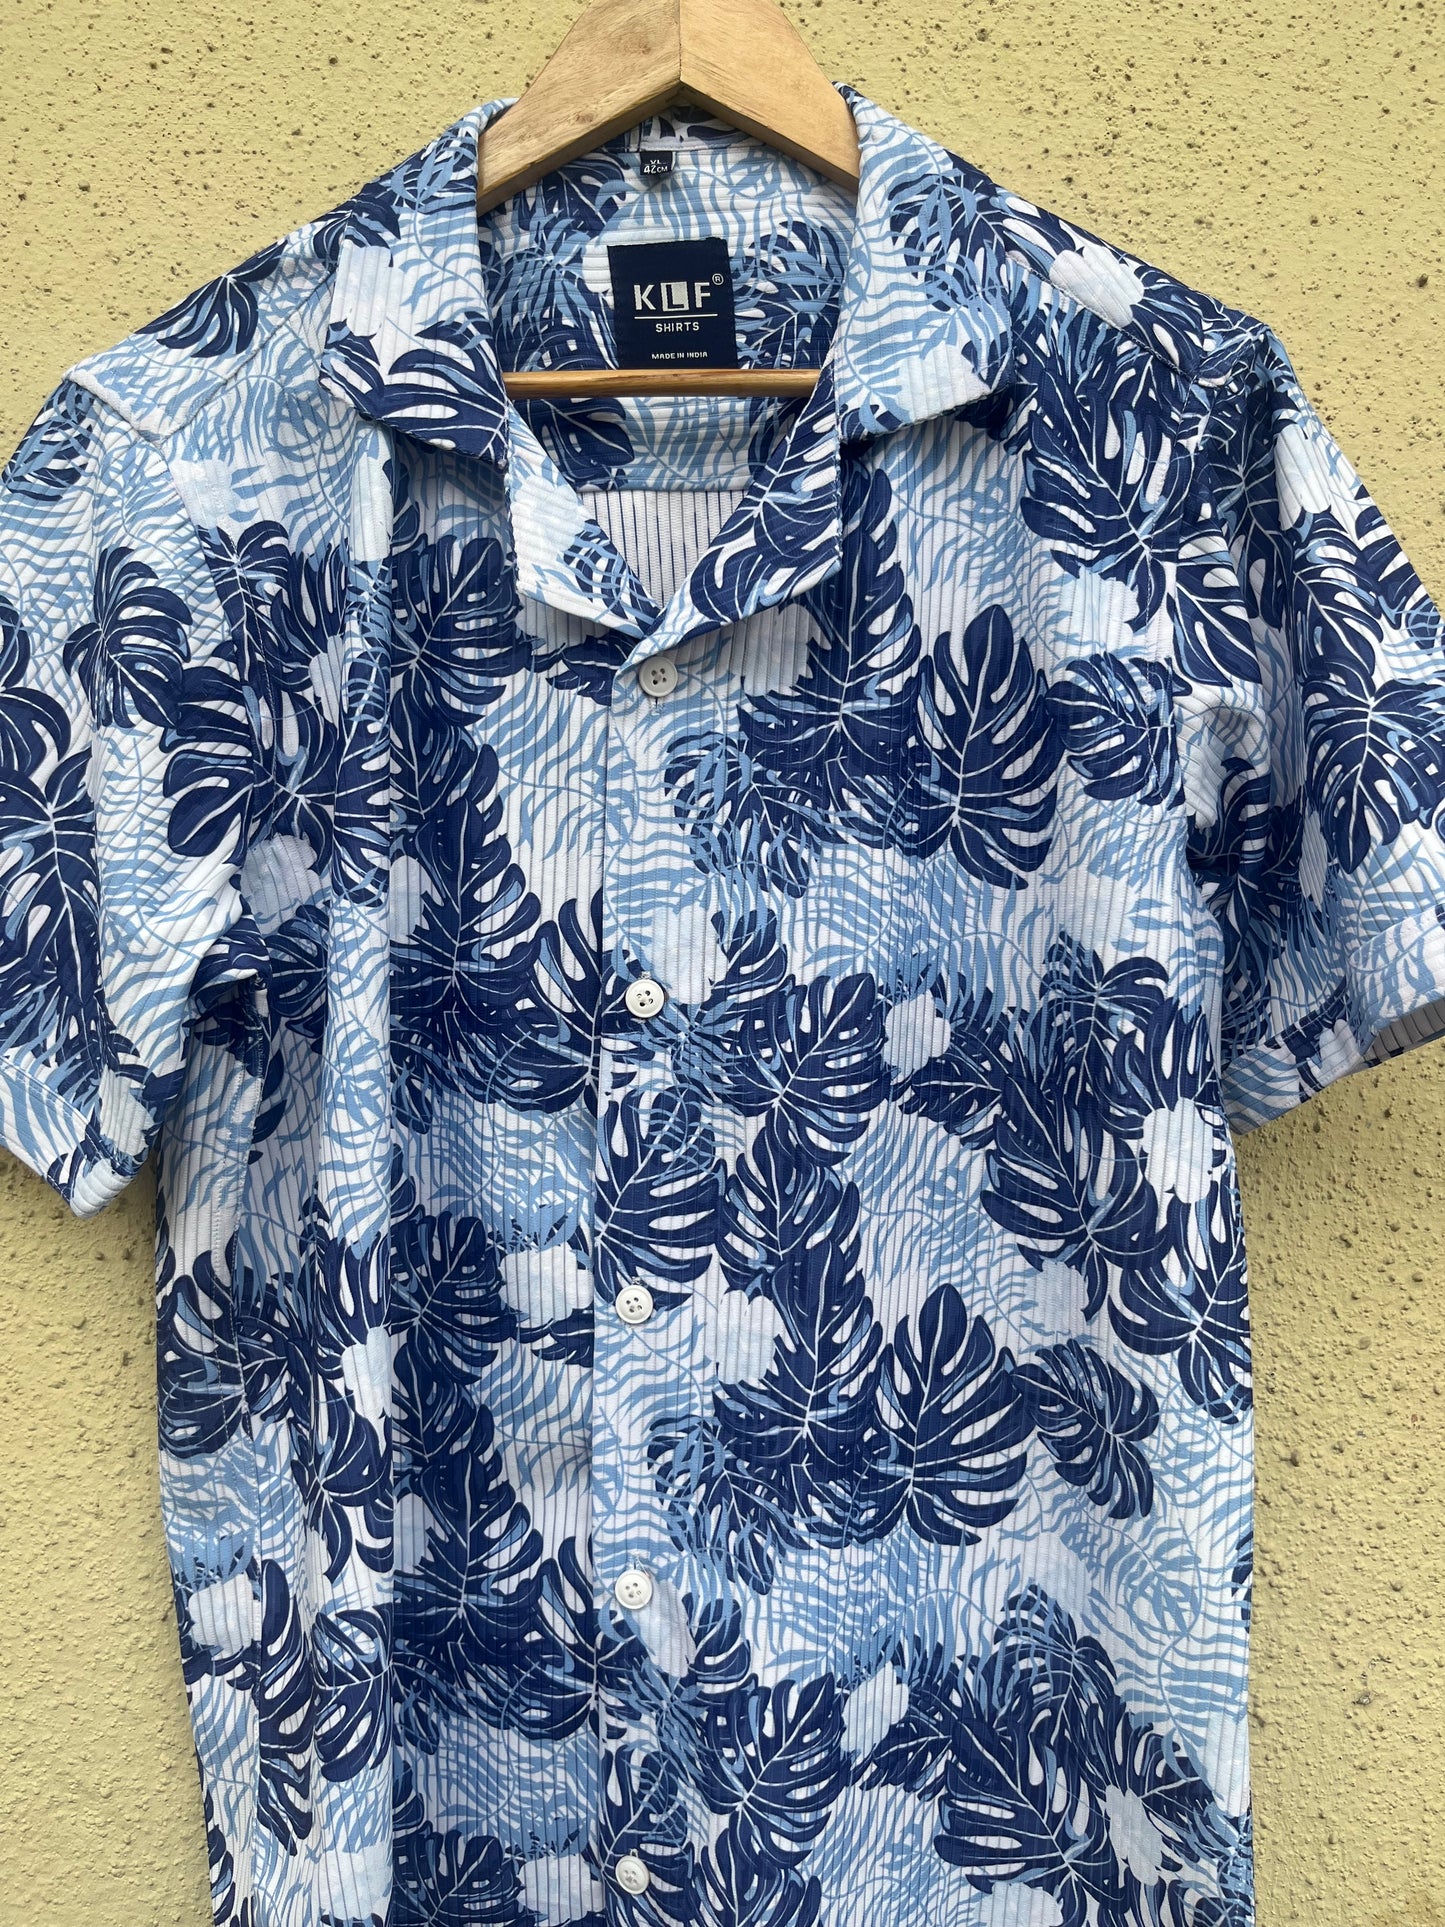 Ocean Blue Half Shirt